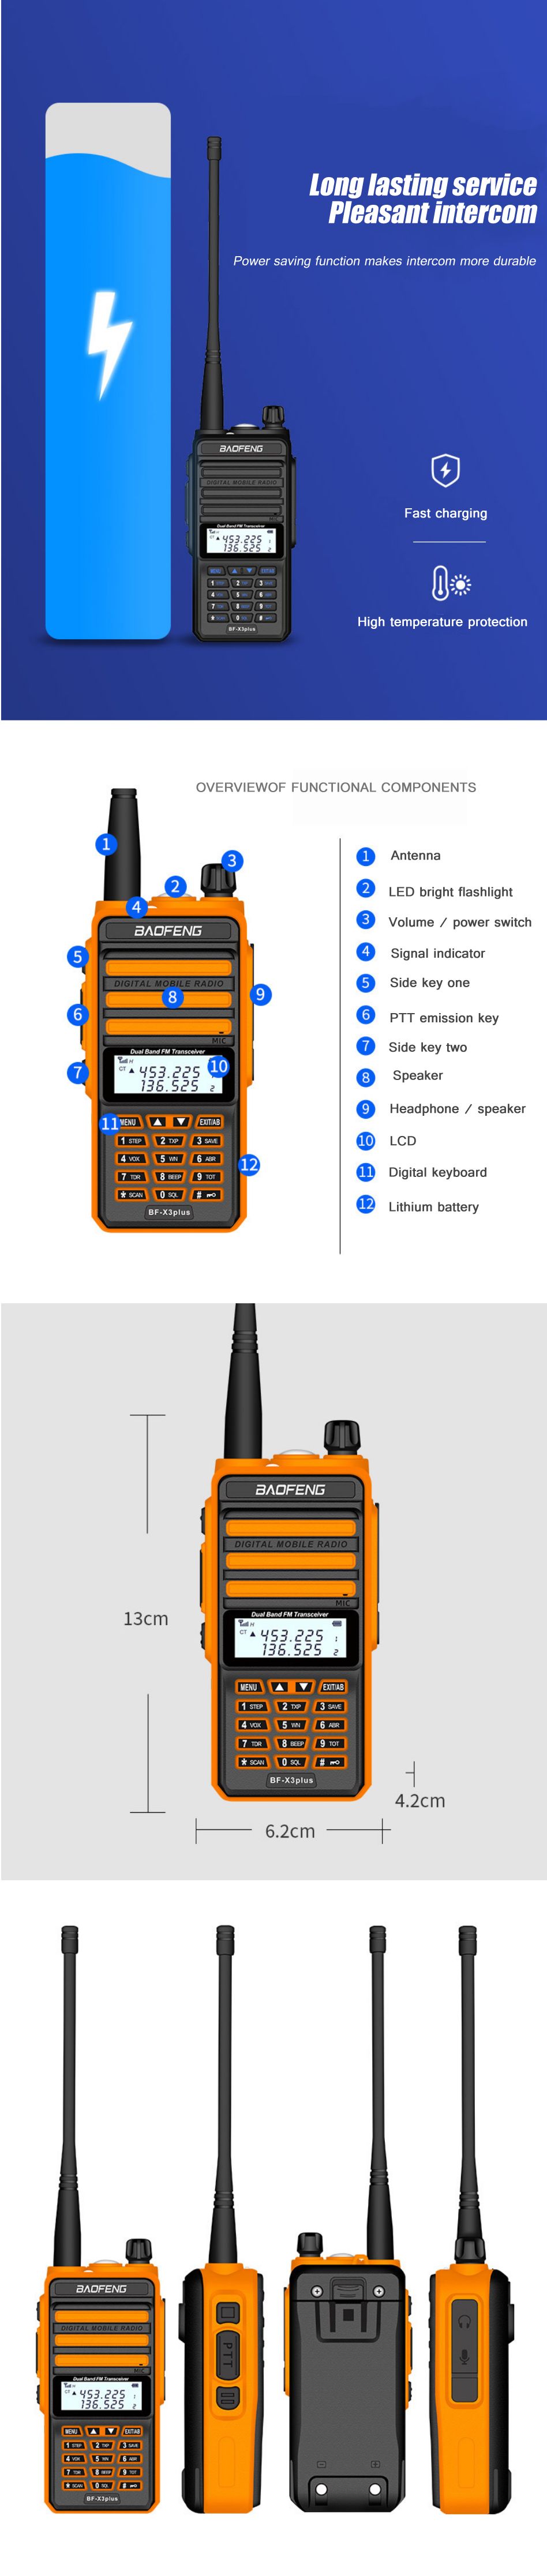 BAOFENG-X3-Plus-18W-9500mAh-Walkie-Talkie-20-KM-Tri-band-Radio-Waterproof-UHFVHF-9500mah-Transceiver-1739570